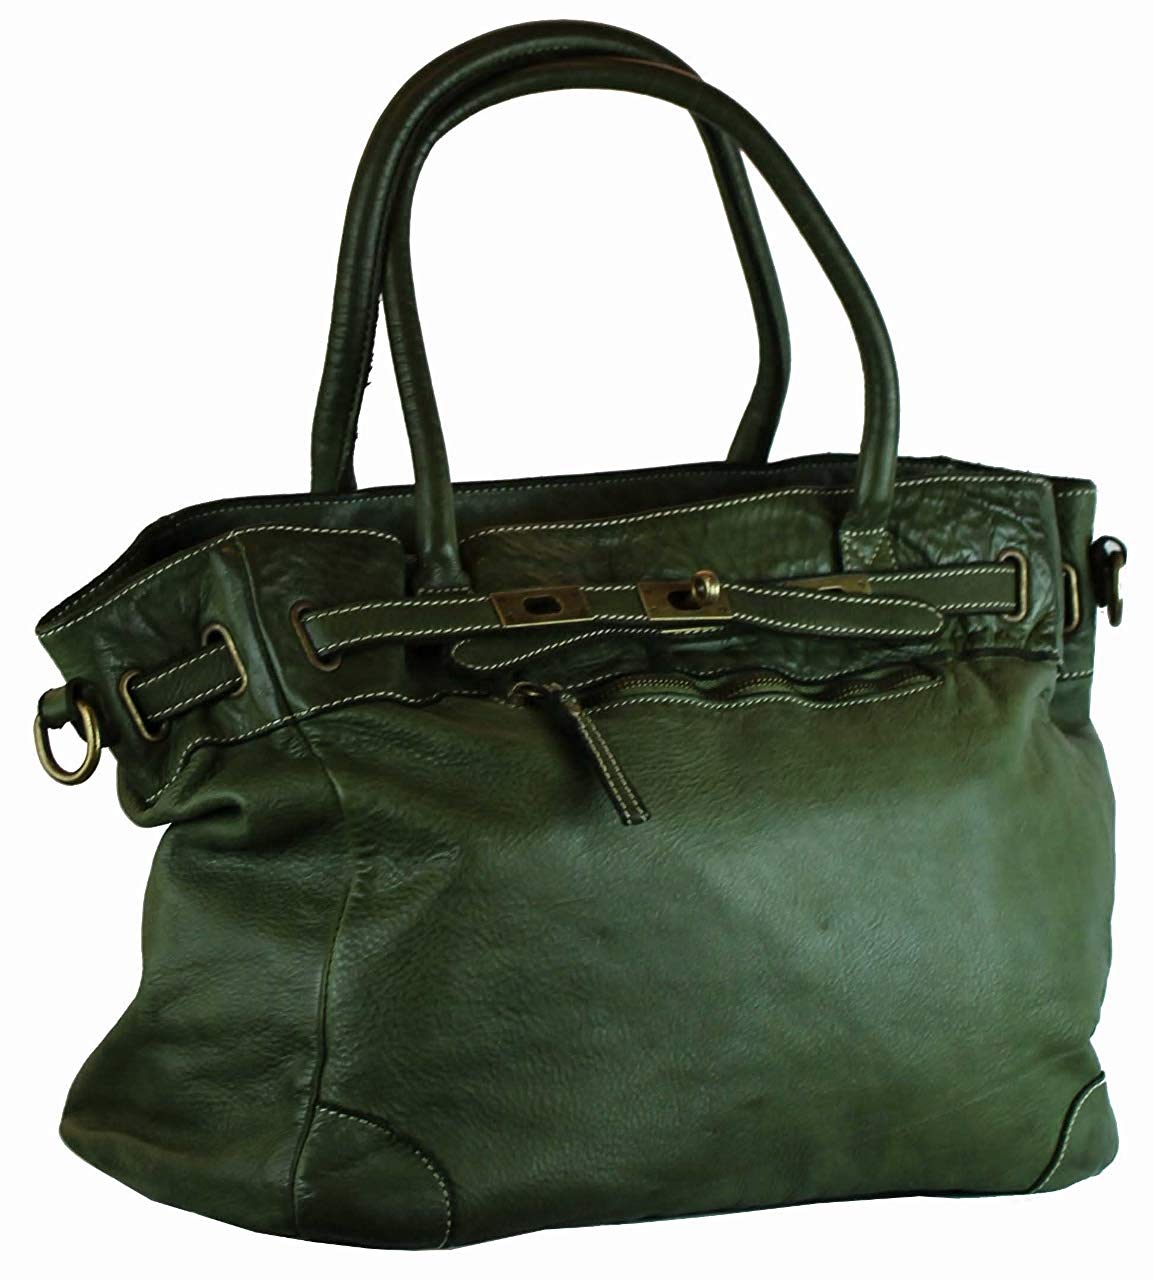 BZNA Bag Mila Grün verde vintage Italy Designer Business Damen Handtasche Ledertasche Schultertasche Tasche Leder Shopper Neu